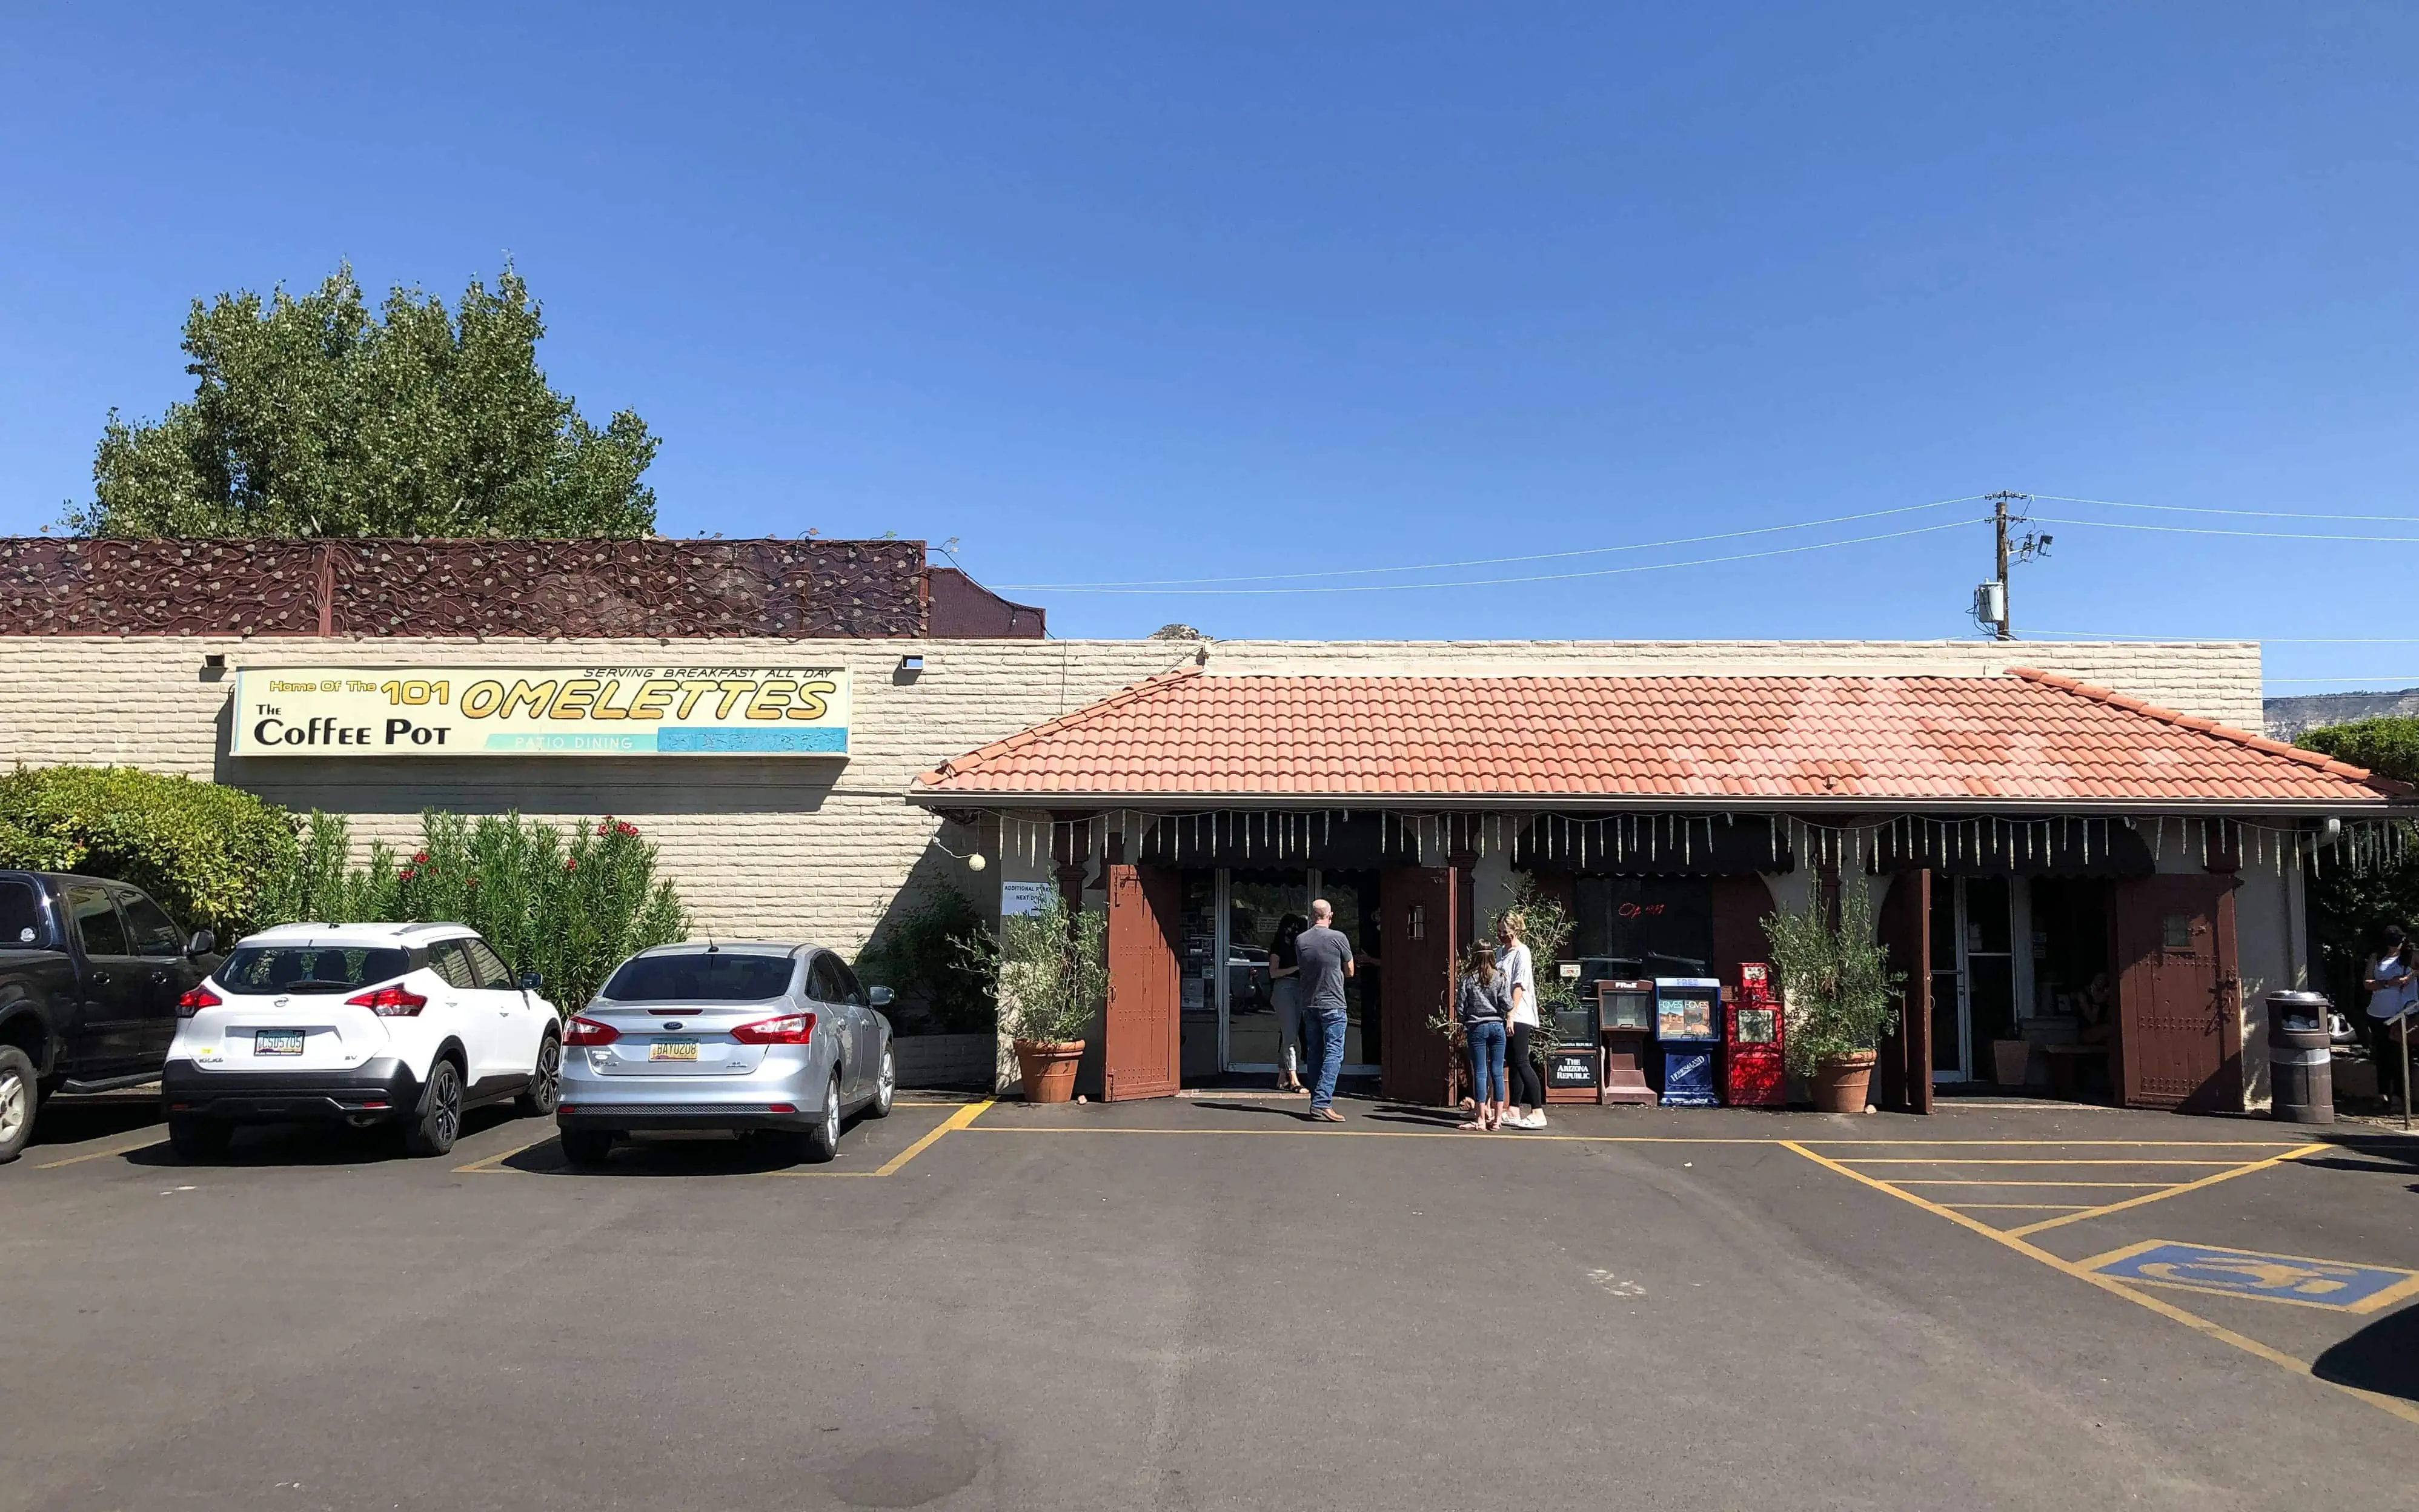 The family-owned Coffee Pot Restaurant in Sedona, Arizona